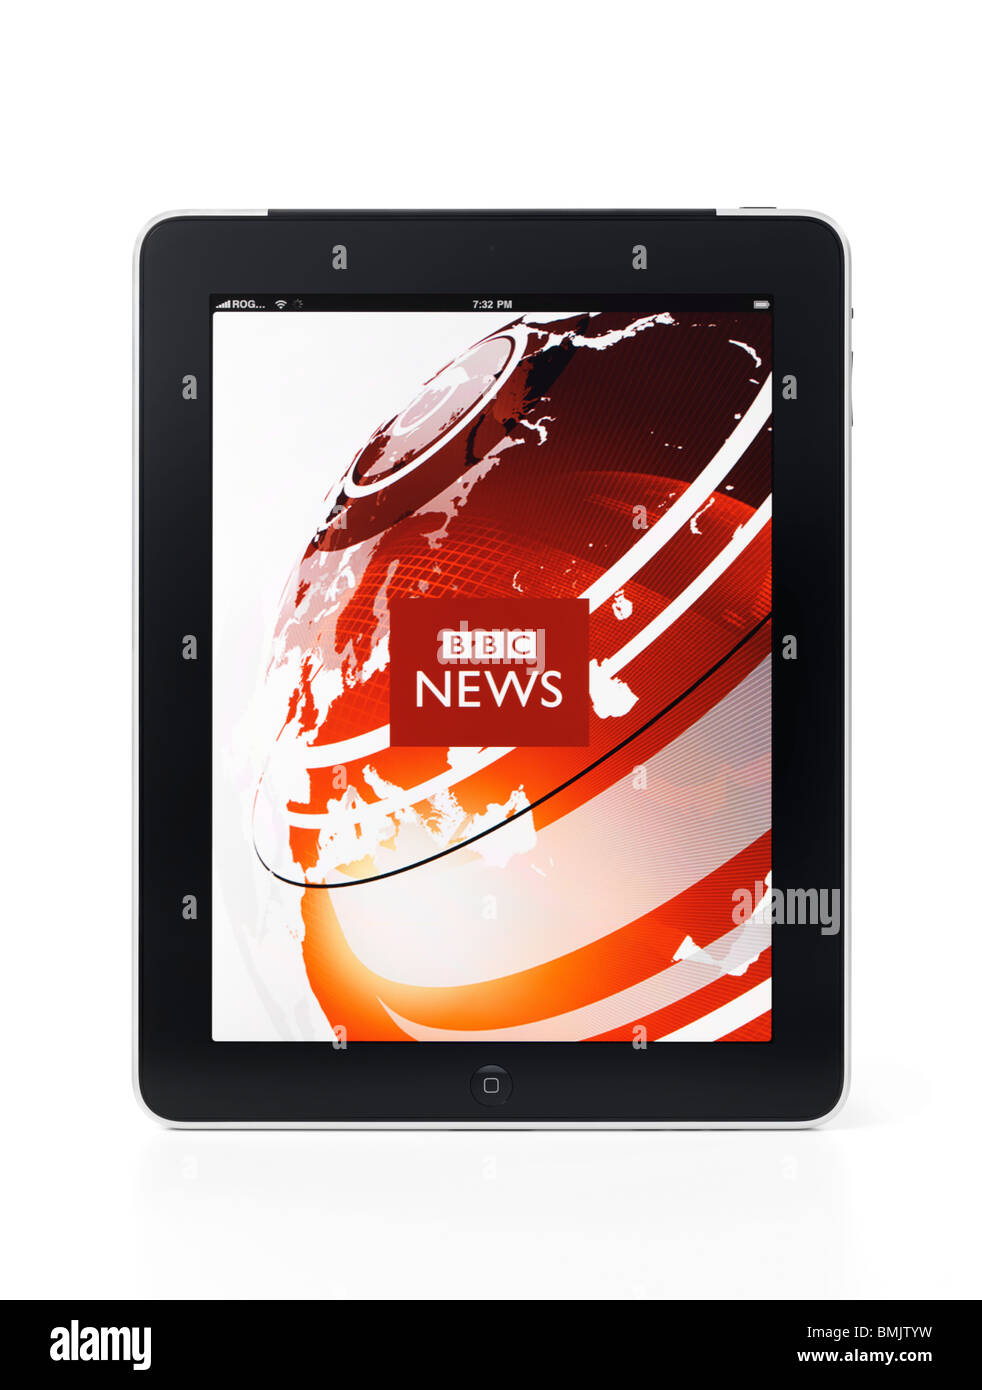 Apple iPad 3G tablet computer with BBC news application sur son affichage isolé sur fond blanc avec clipping path Banque D'Images